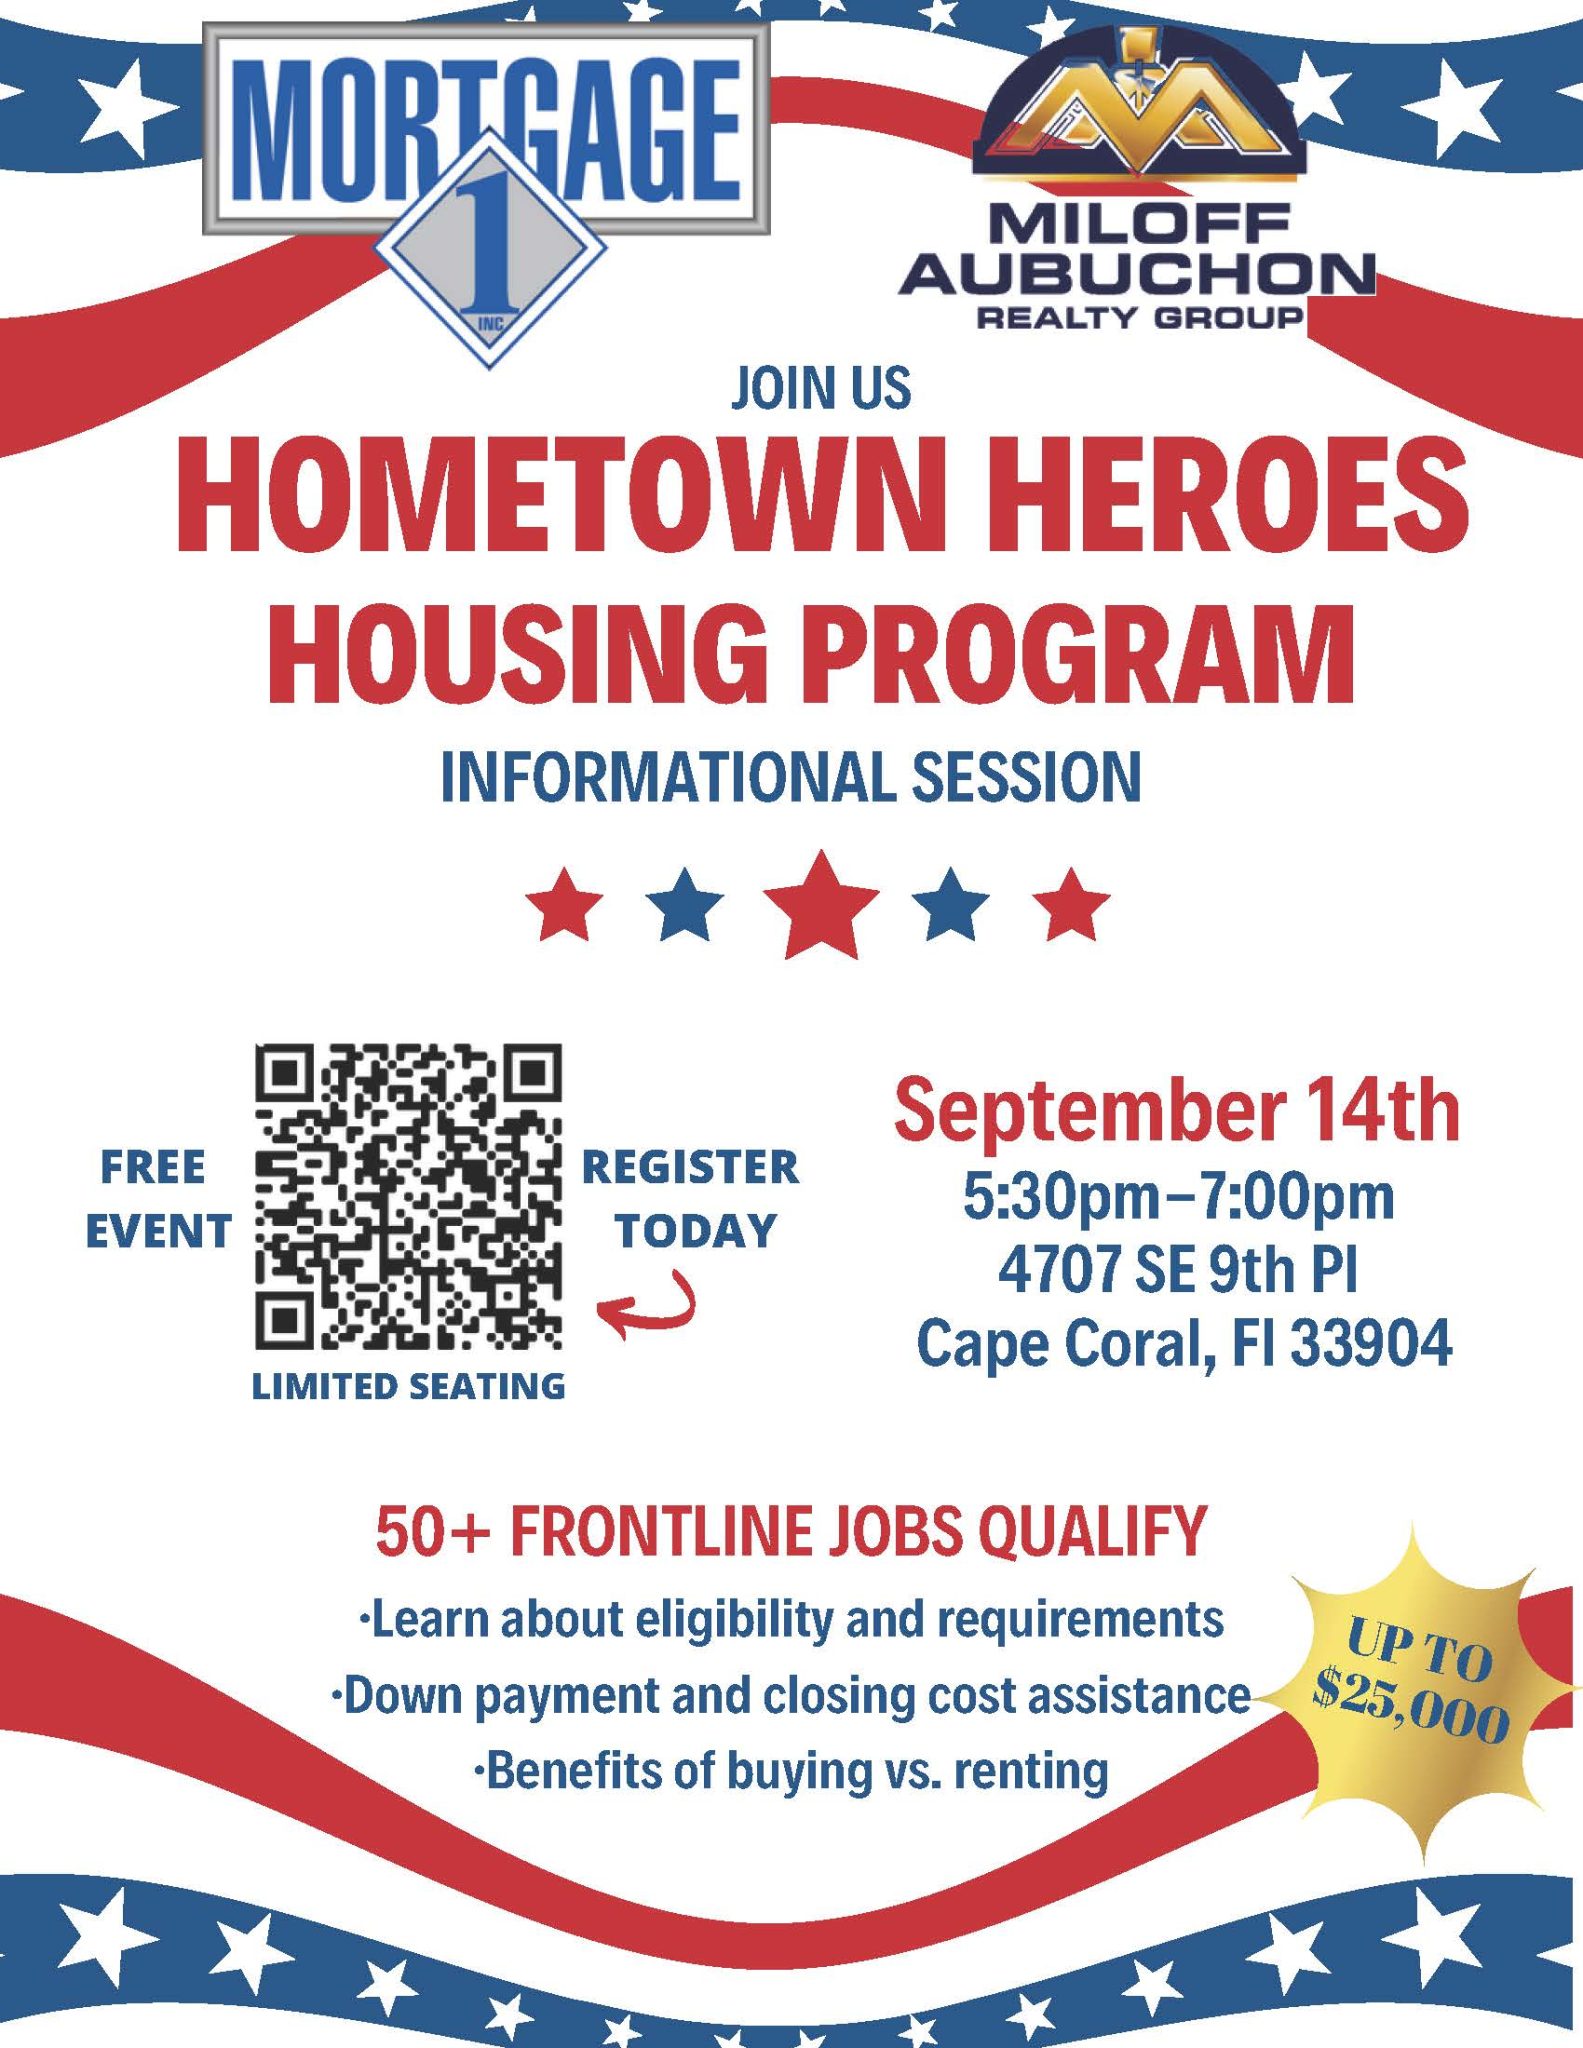 Hometown Heroes Housing Program - Miloff Aubuchon Realty Group